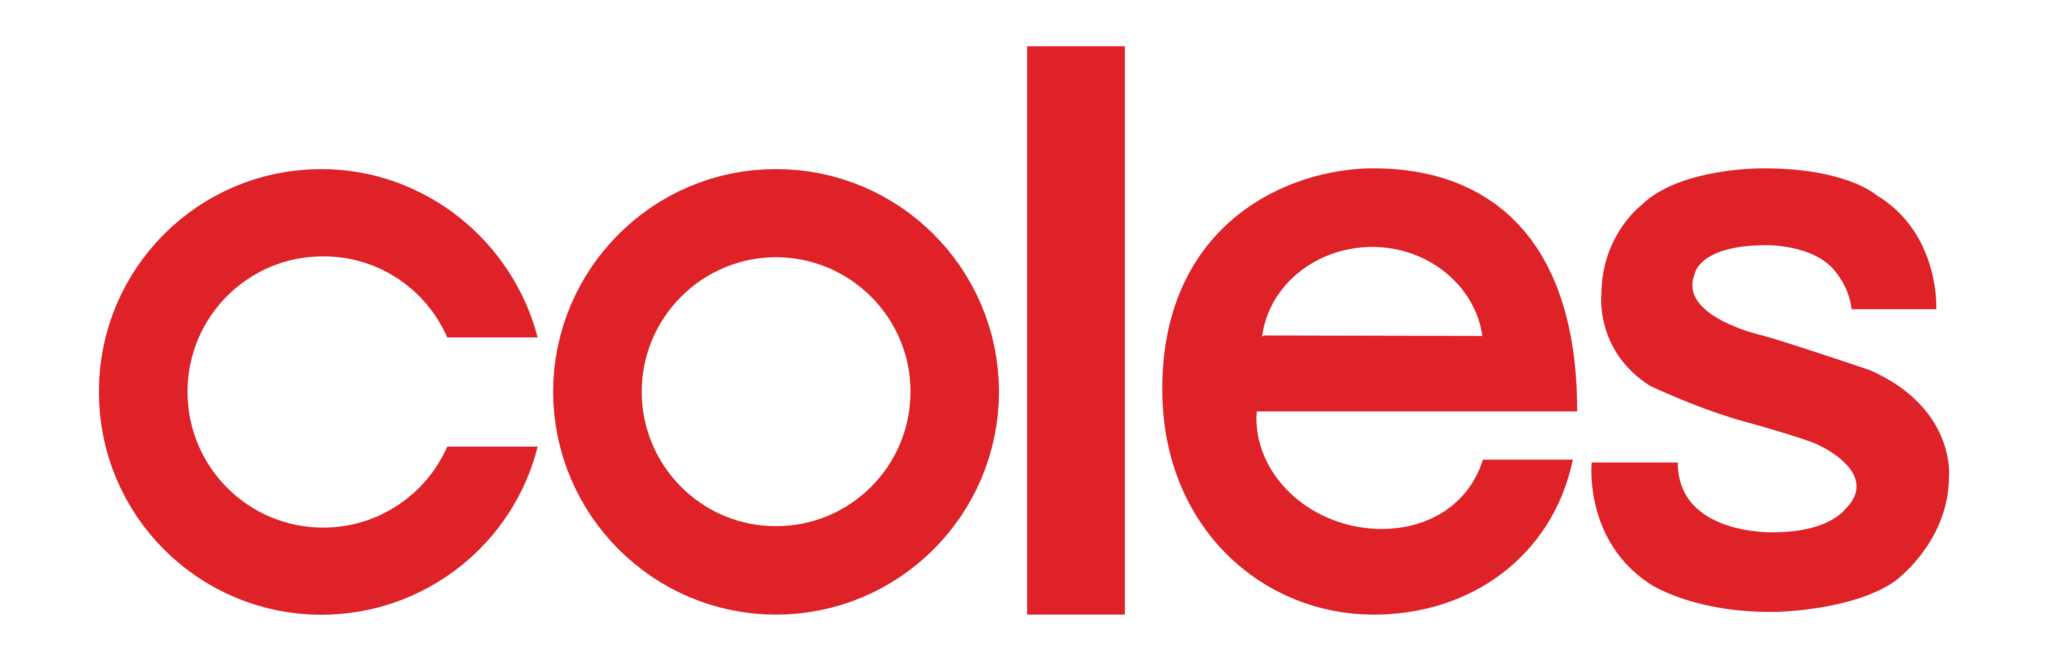 Coles_logo_logotype | Slack Investor